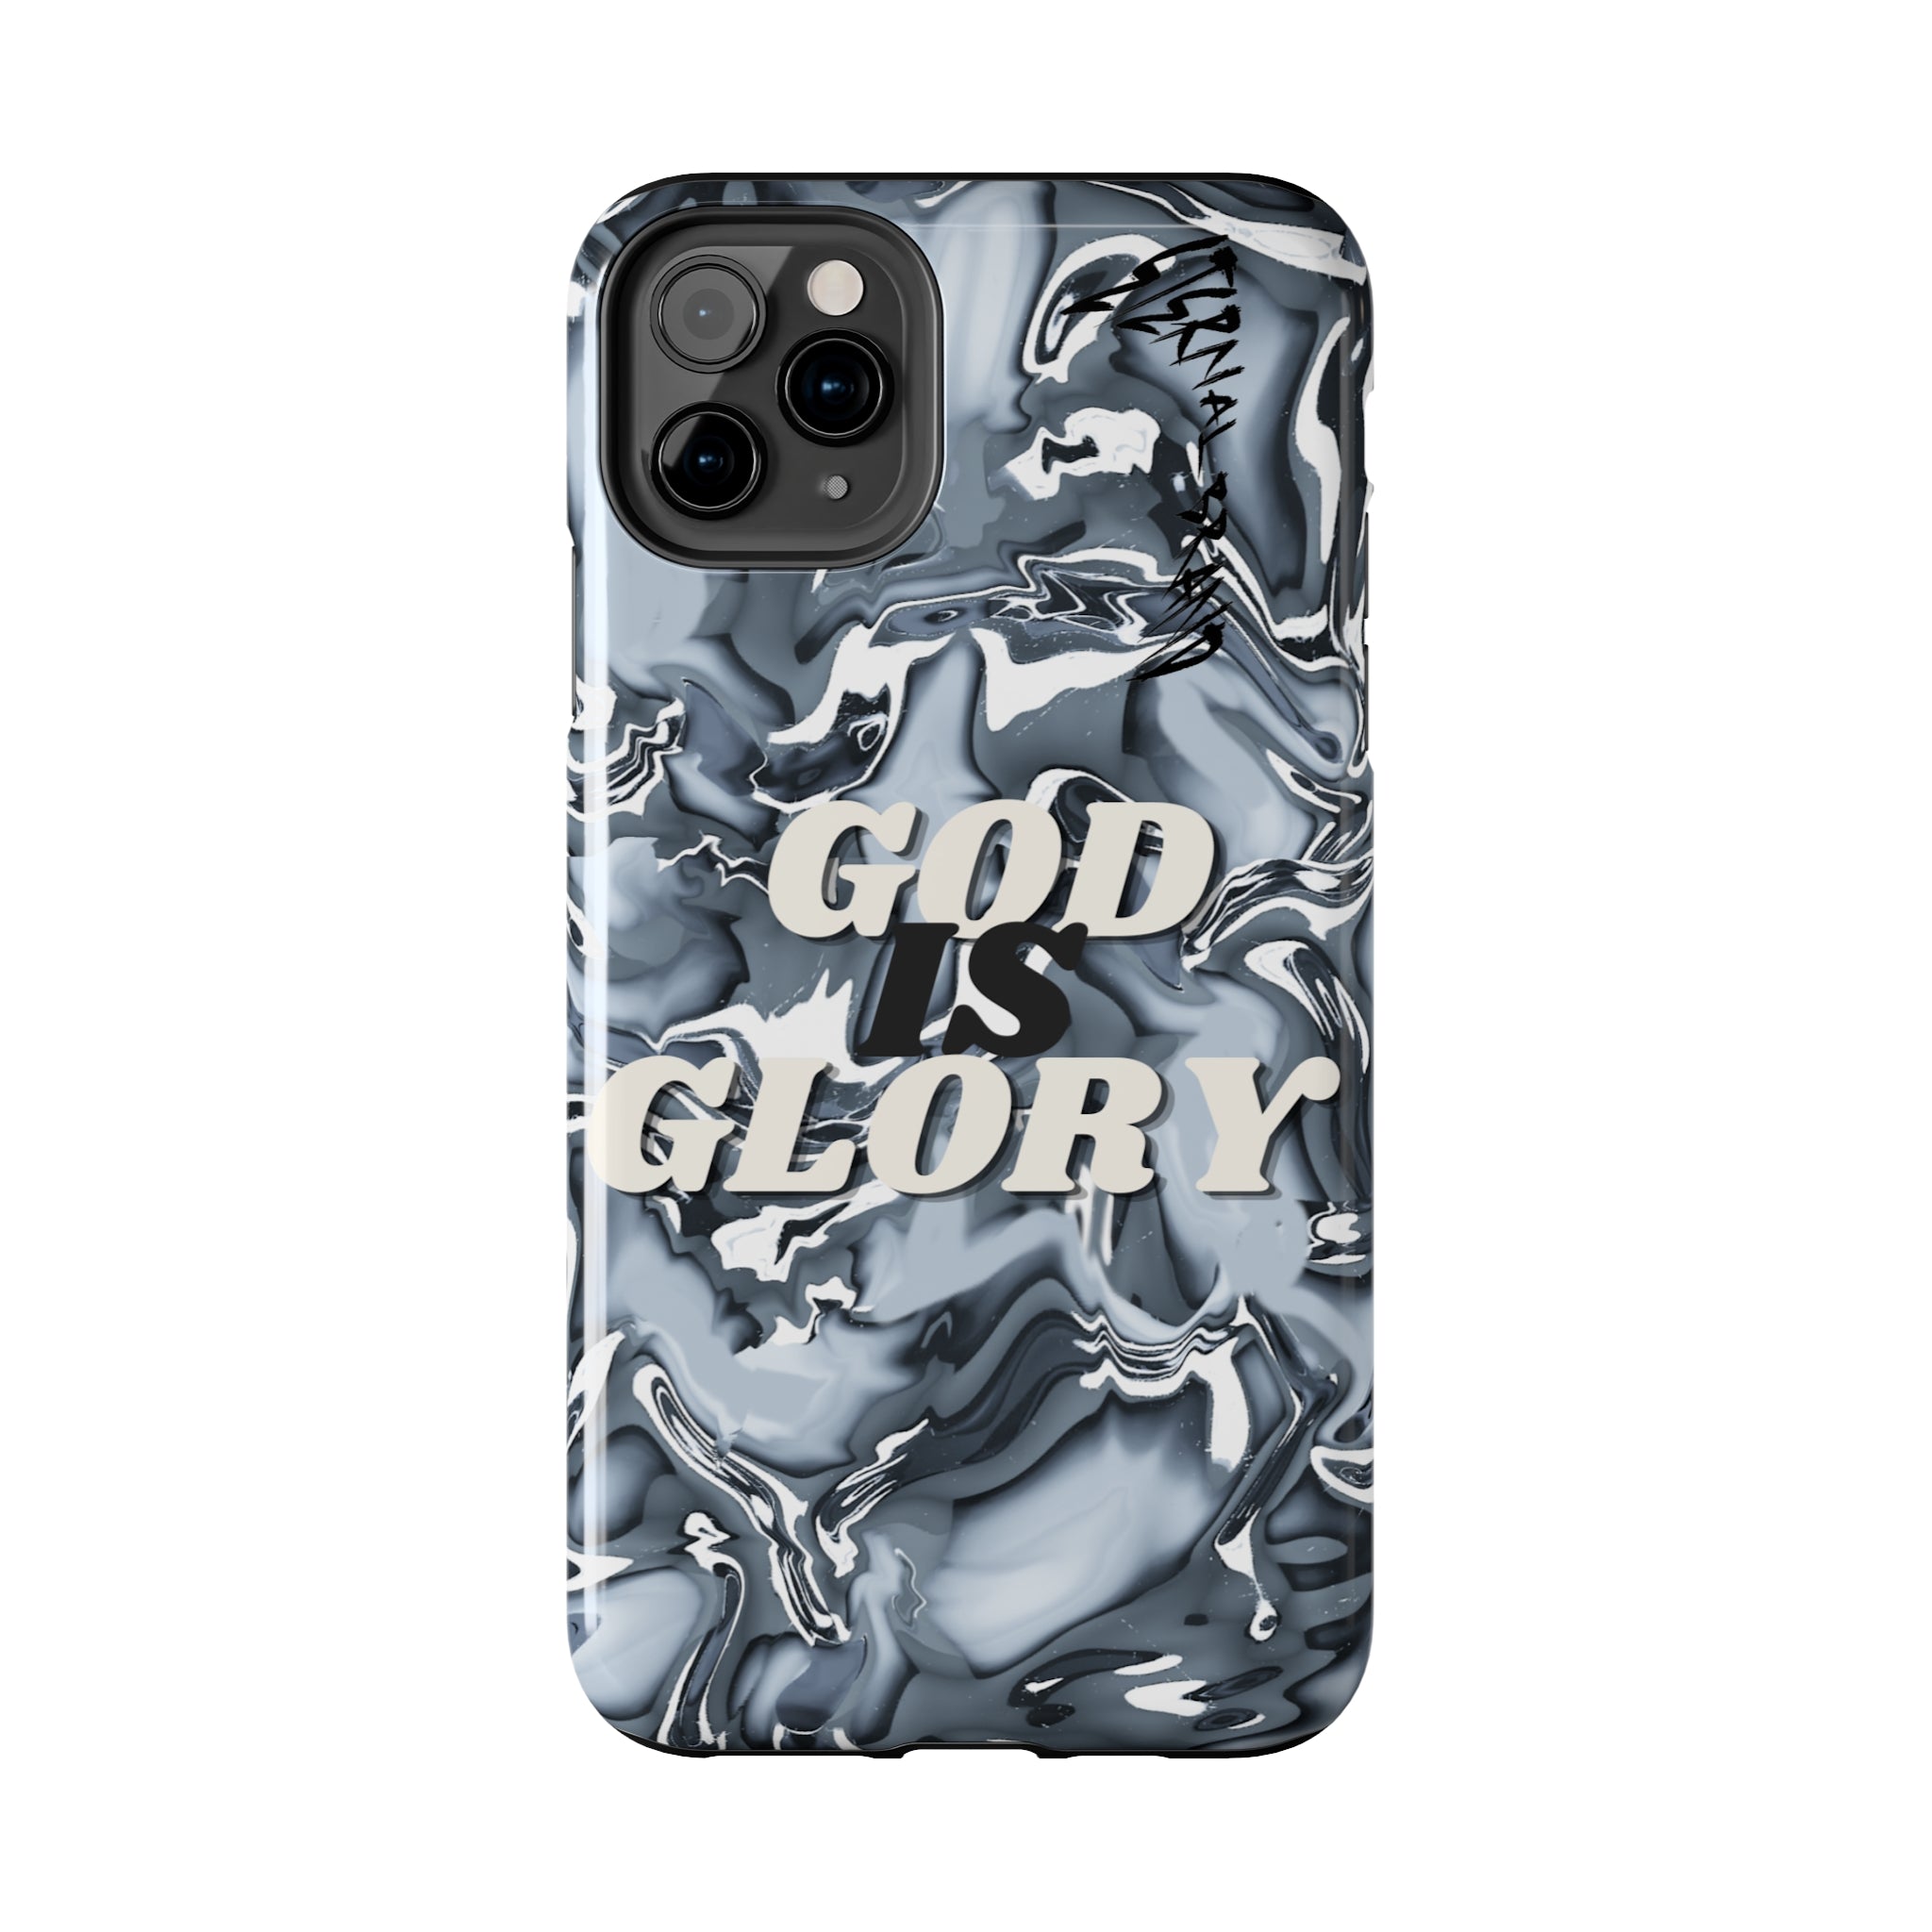 Glory (Hard) Bible Phone Case